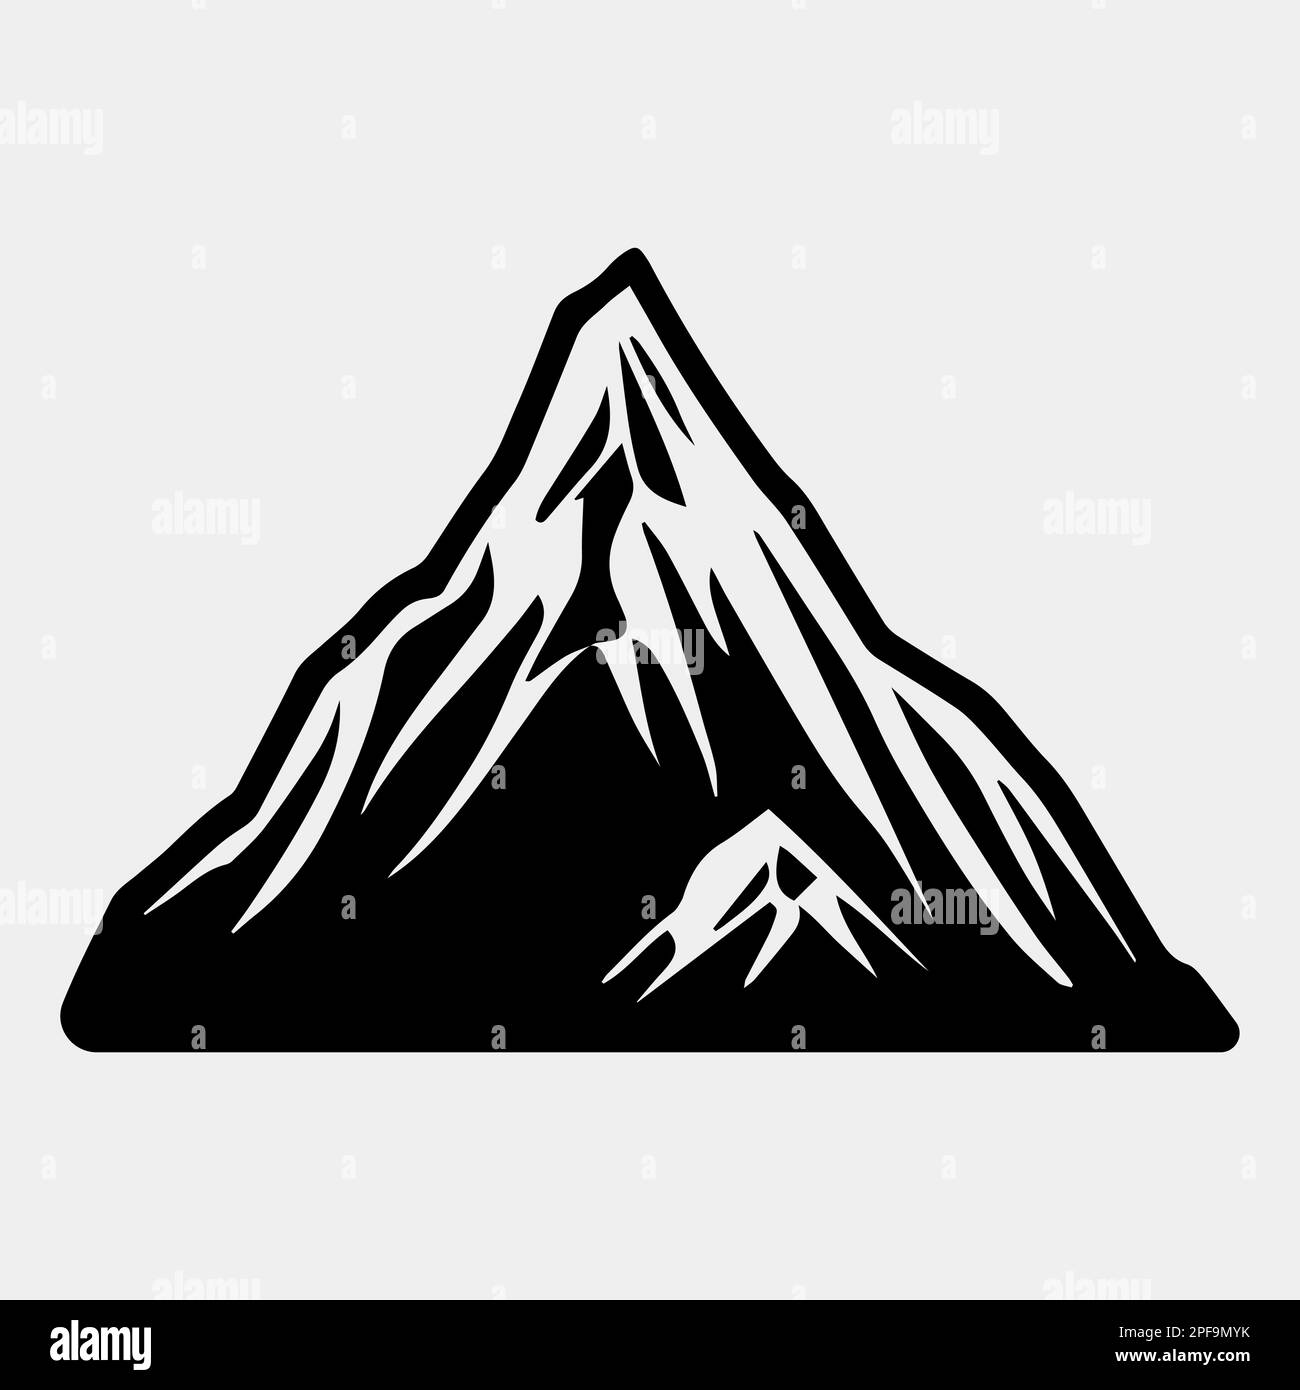 Mountain silhouette - vector icon. Rocky peaks. Mountains ranges. Black and white mountain icon Stock Vector